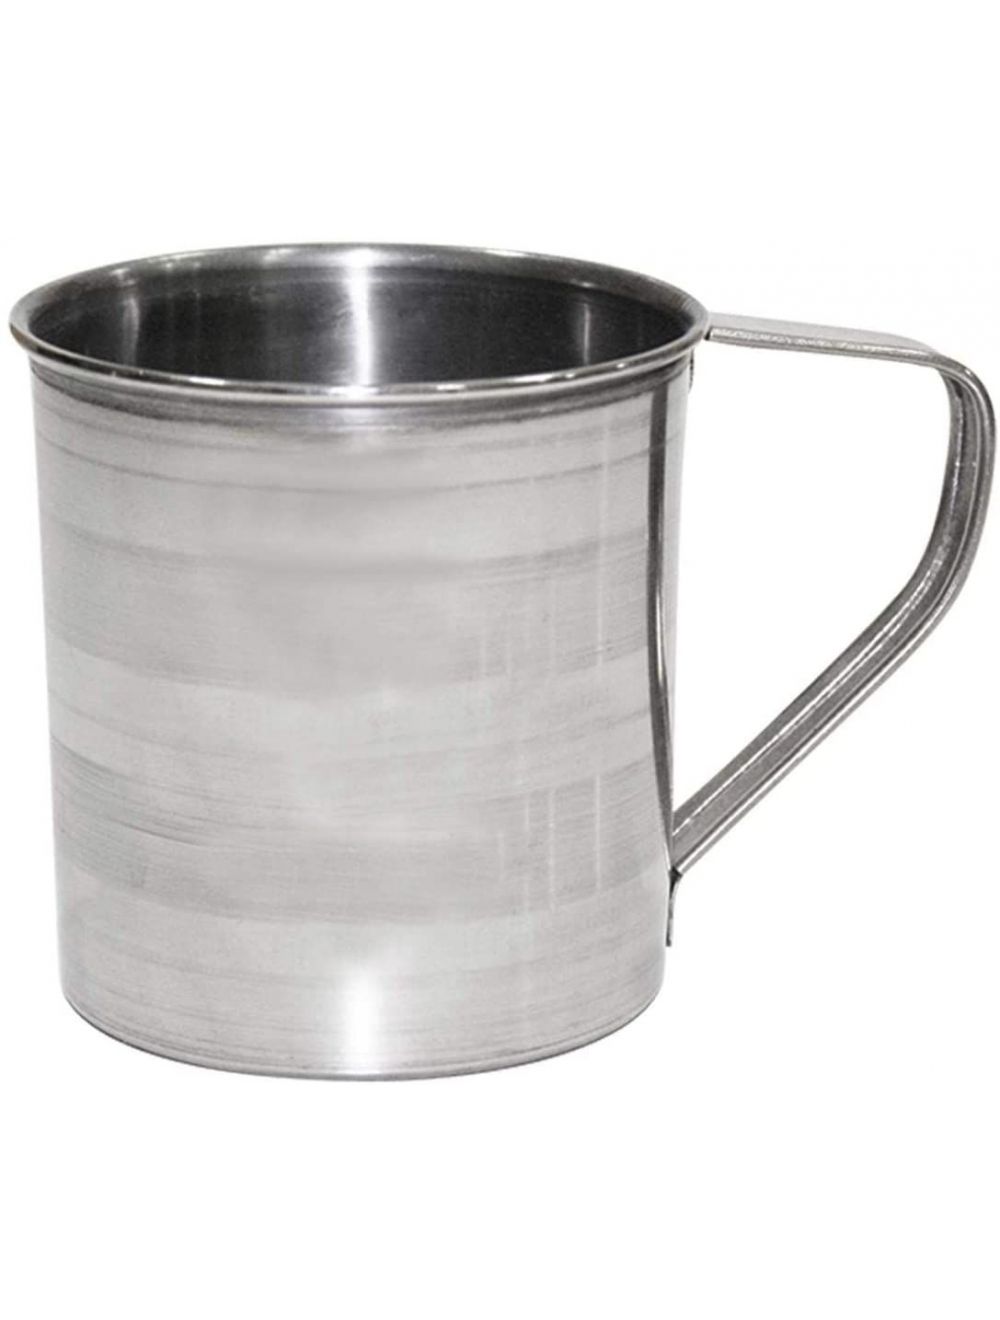 Raj 10 cm Stainless Steel Touch Mug, Silver-STM010